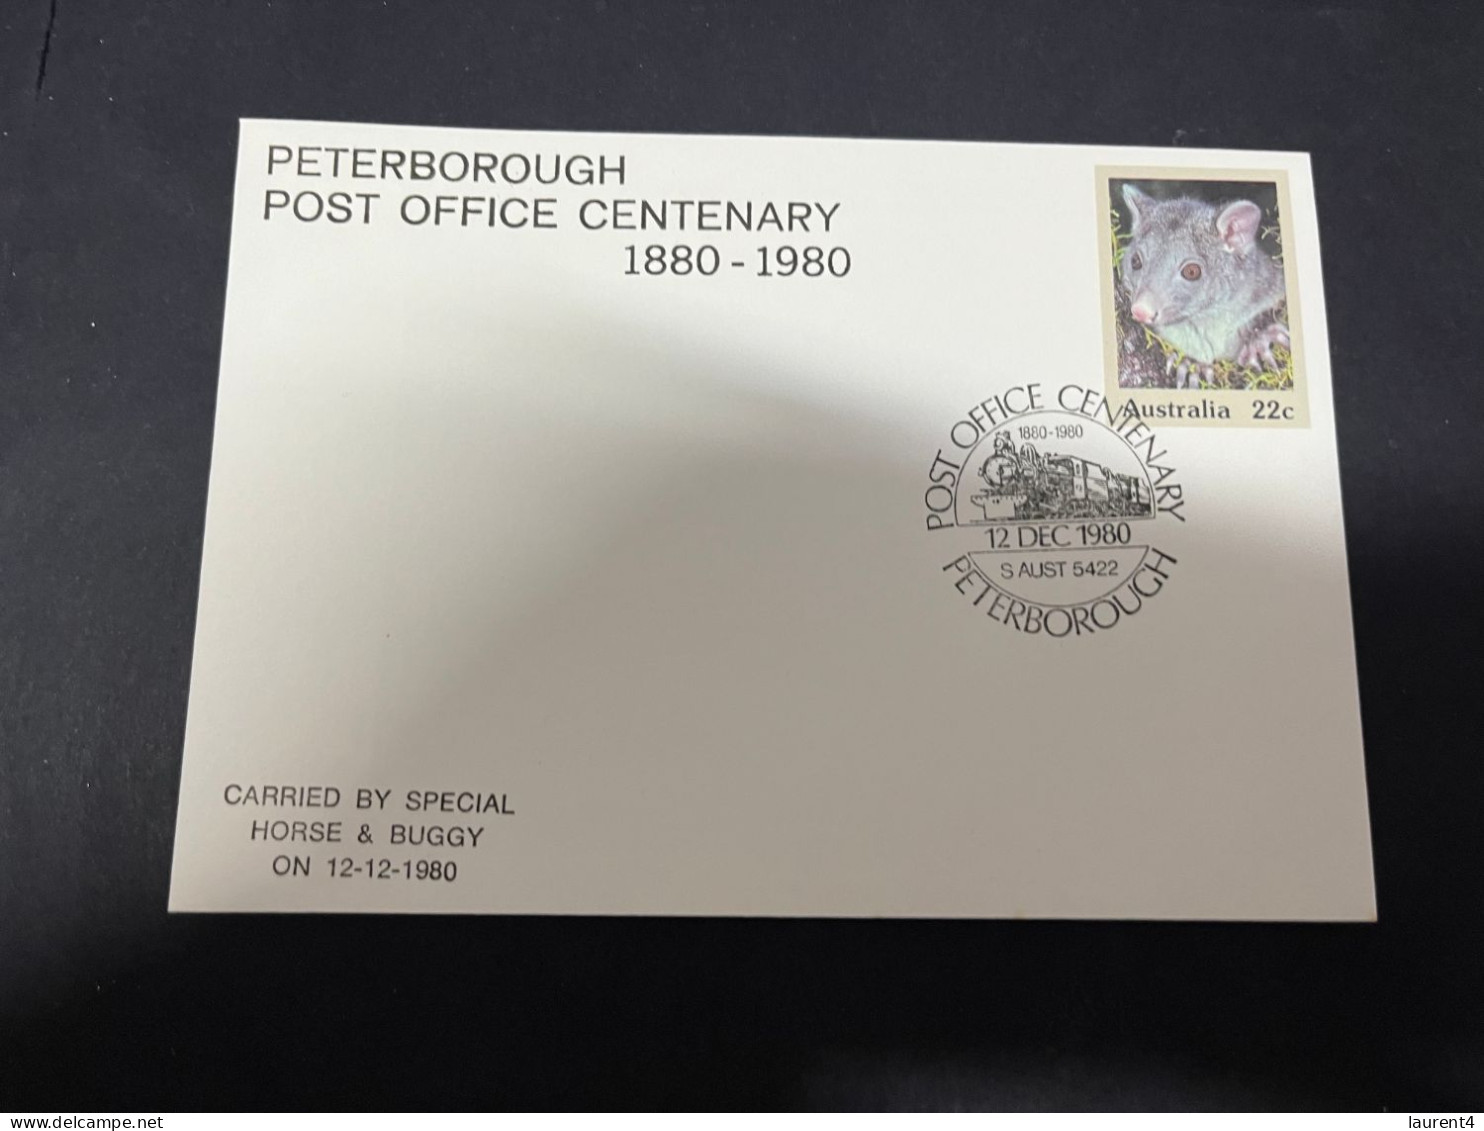 30-4-2023 (3 Z 29) Australia FDC (1 Cover) 1980 - Peterborough Post Office Centenary (Brushtail Possum) - Sobre Primer Día (FDC)